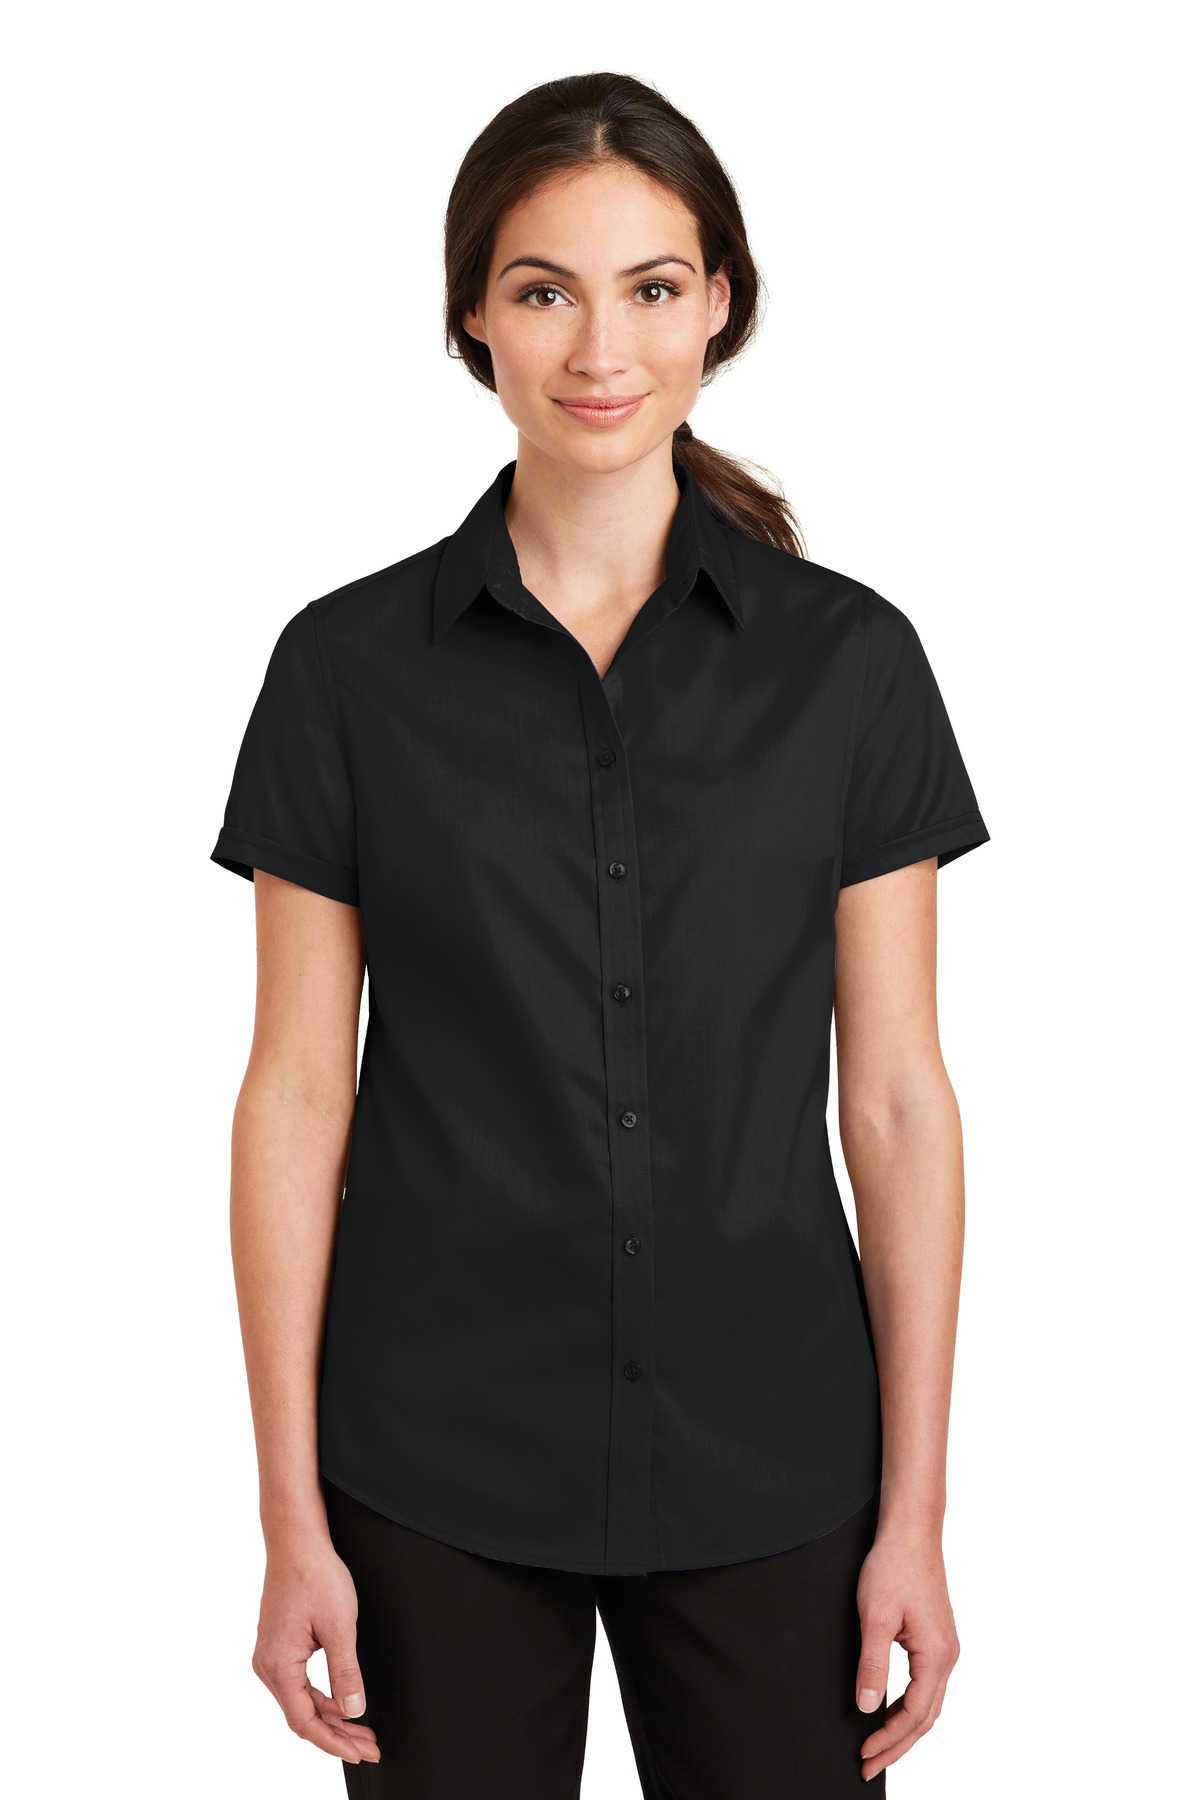 Port Authority Ladies Short Sleeve SuperPro Twill Shirt - L664